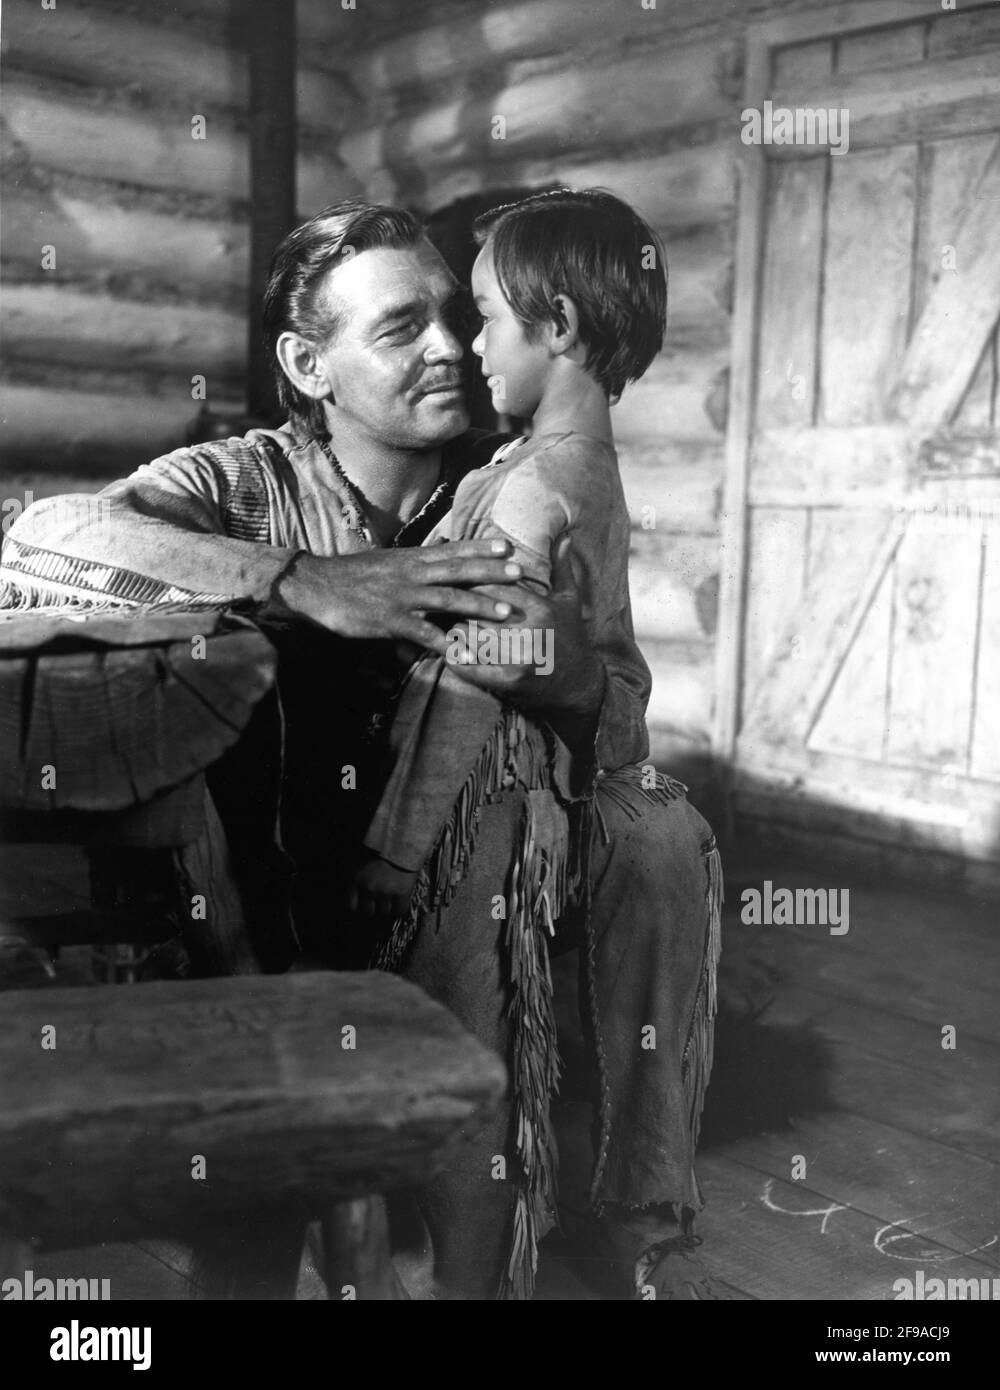 CLARK GABLE and Young Child in ACROSS THE WIDE MISSOURI 1951 director WILLIAM A. WELLMAN screenplay Talbot Jennings book Bernard DeVoto Metro Goldwyn Mayer Stock Photo